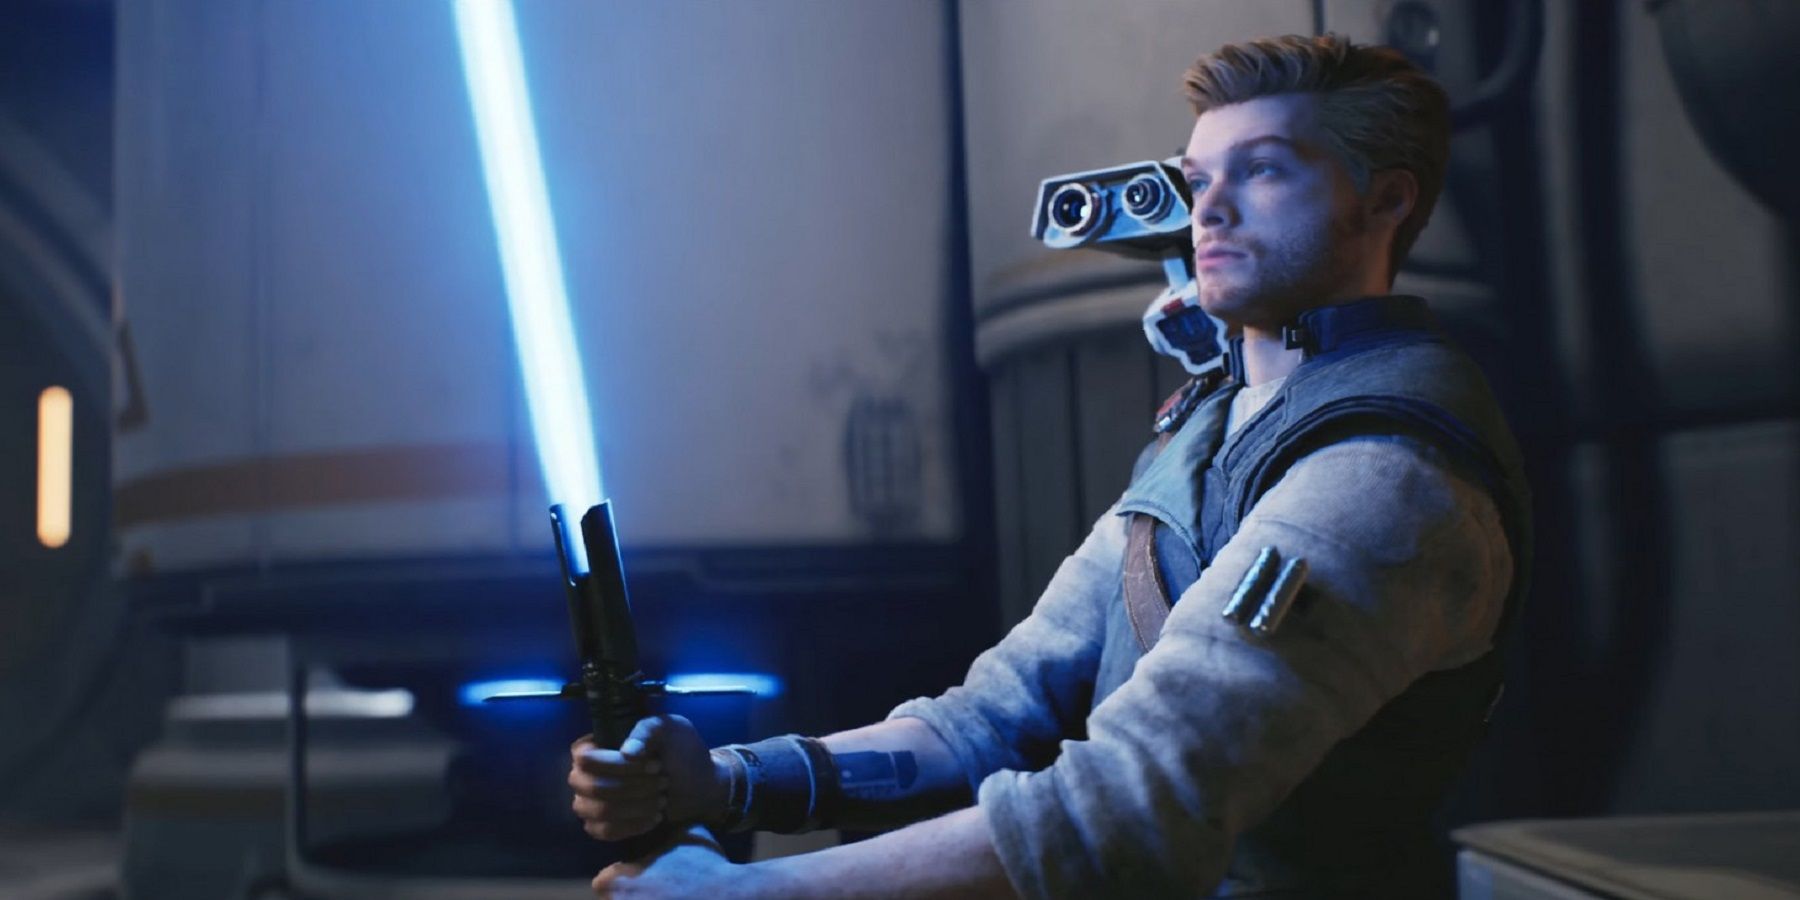 Star Wars Jedi: Survivor Setting Change Can Fix PS5 Problem